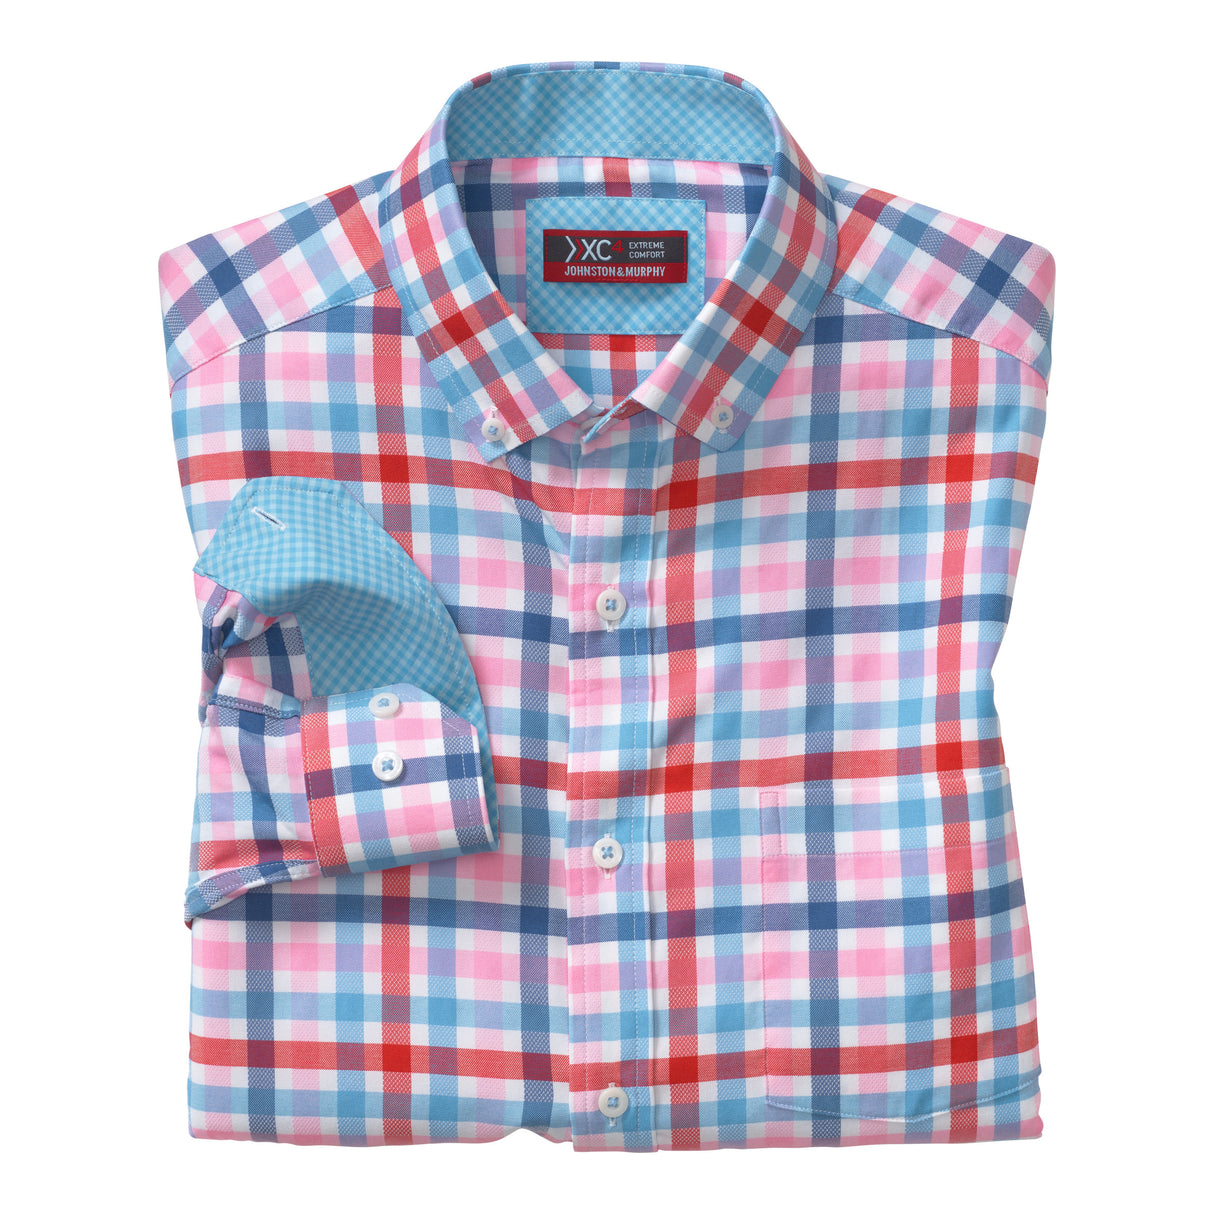 74-9305 XC4 Shirt-Blue/Red Multi Check by Johnston & Murphy